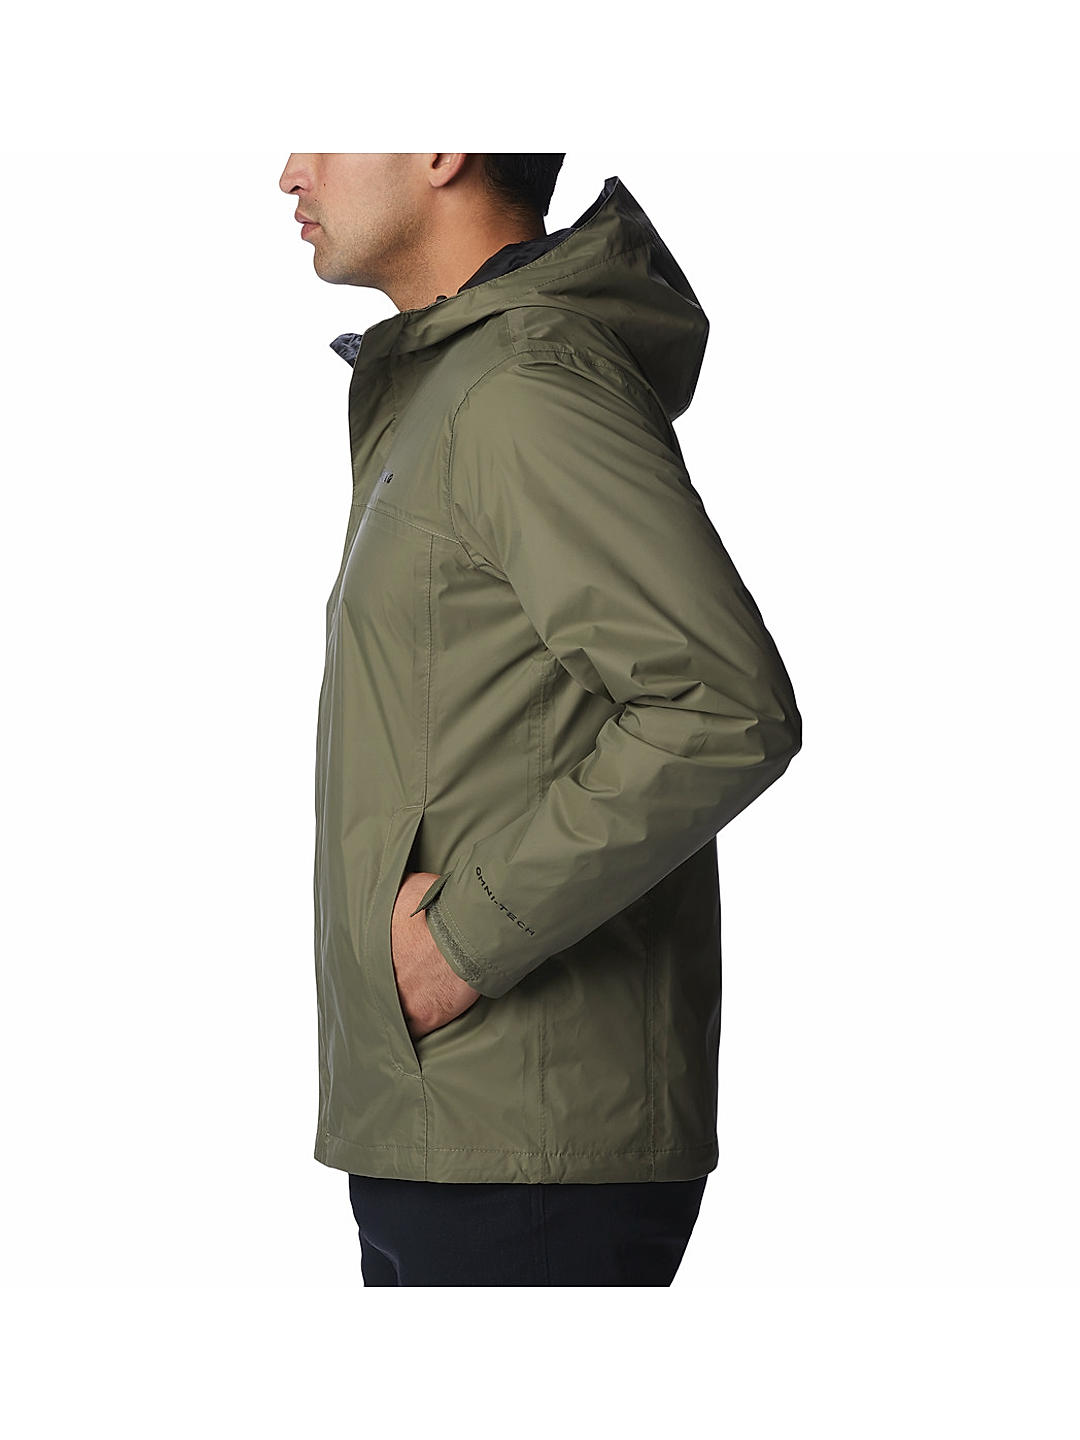 Men's Winter Waterproof Coats Jacket - Cycorld